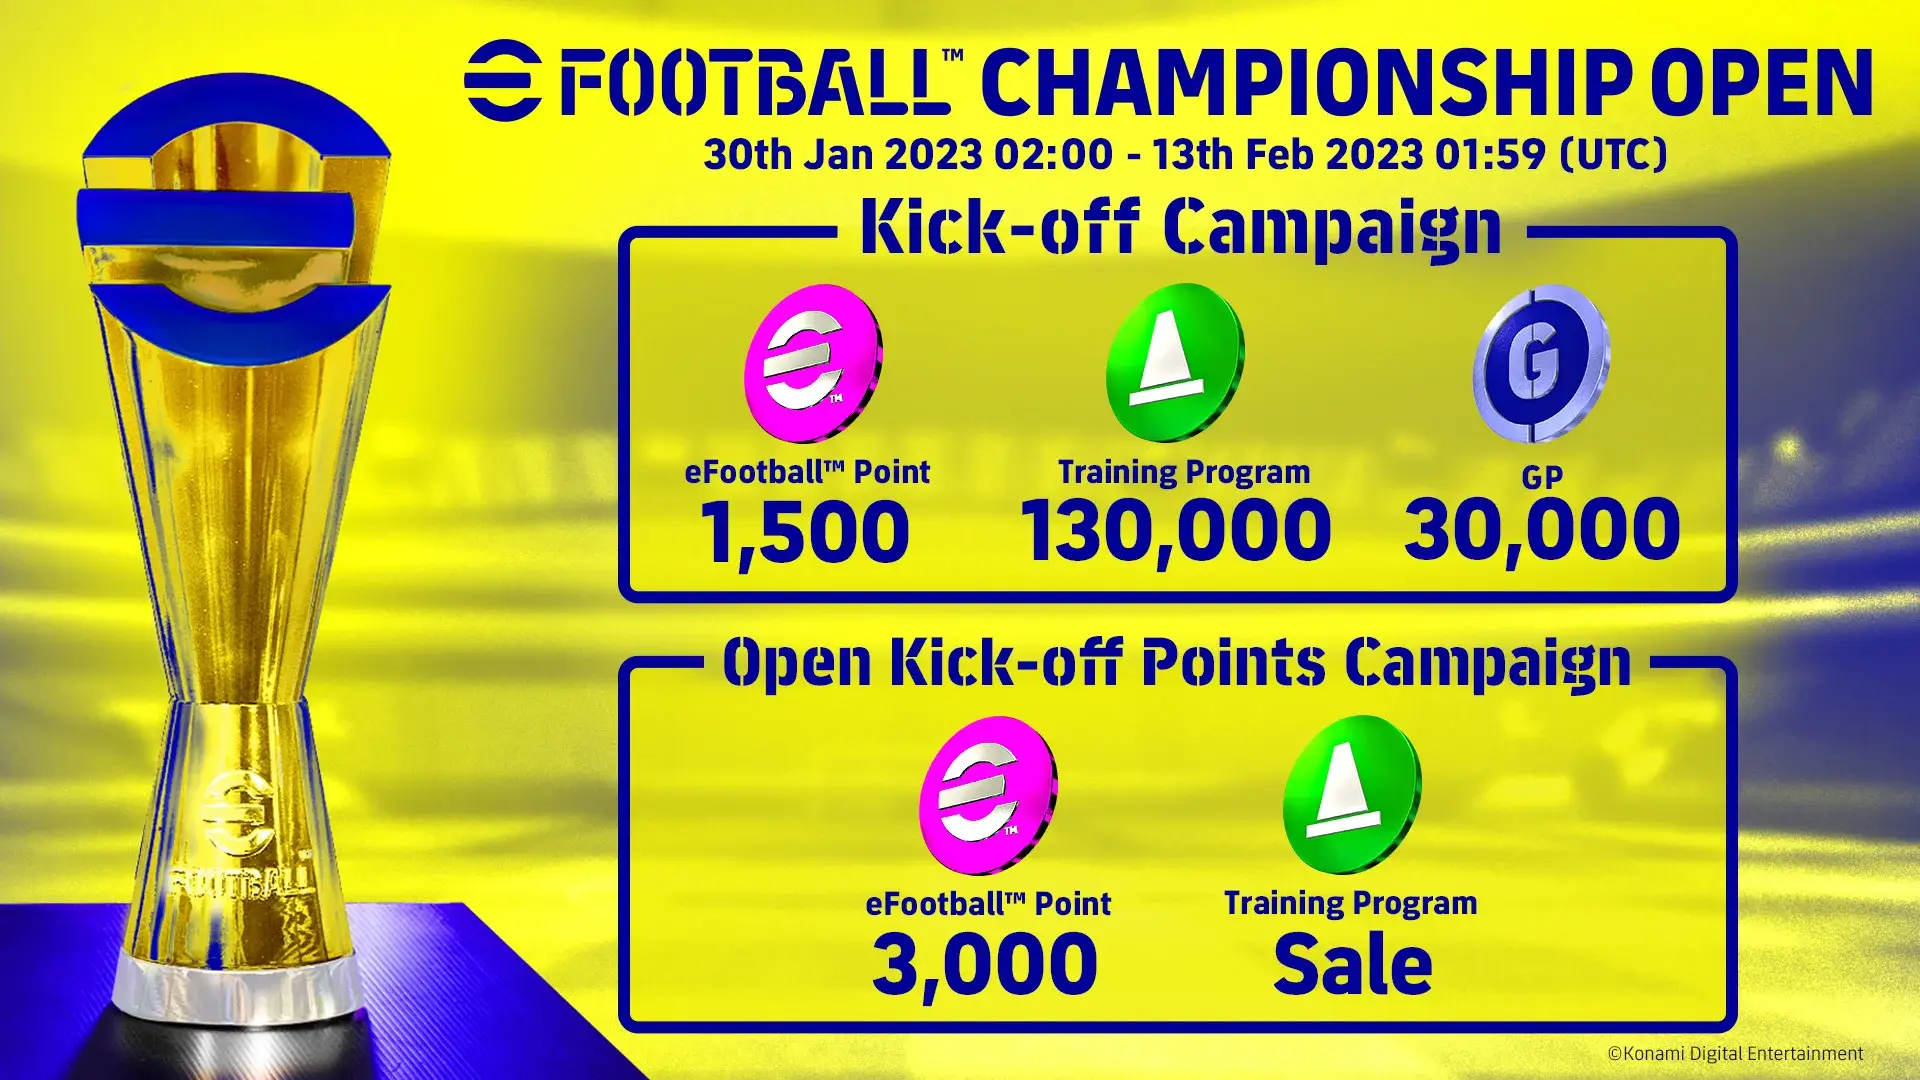 efootball championship open campaign en (1)